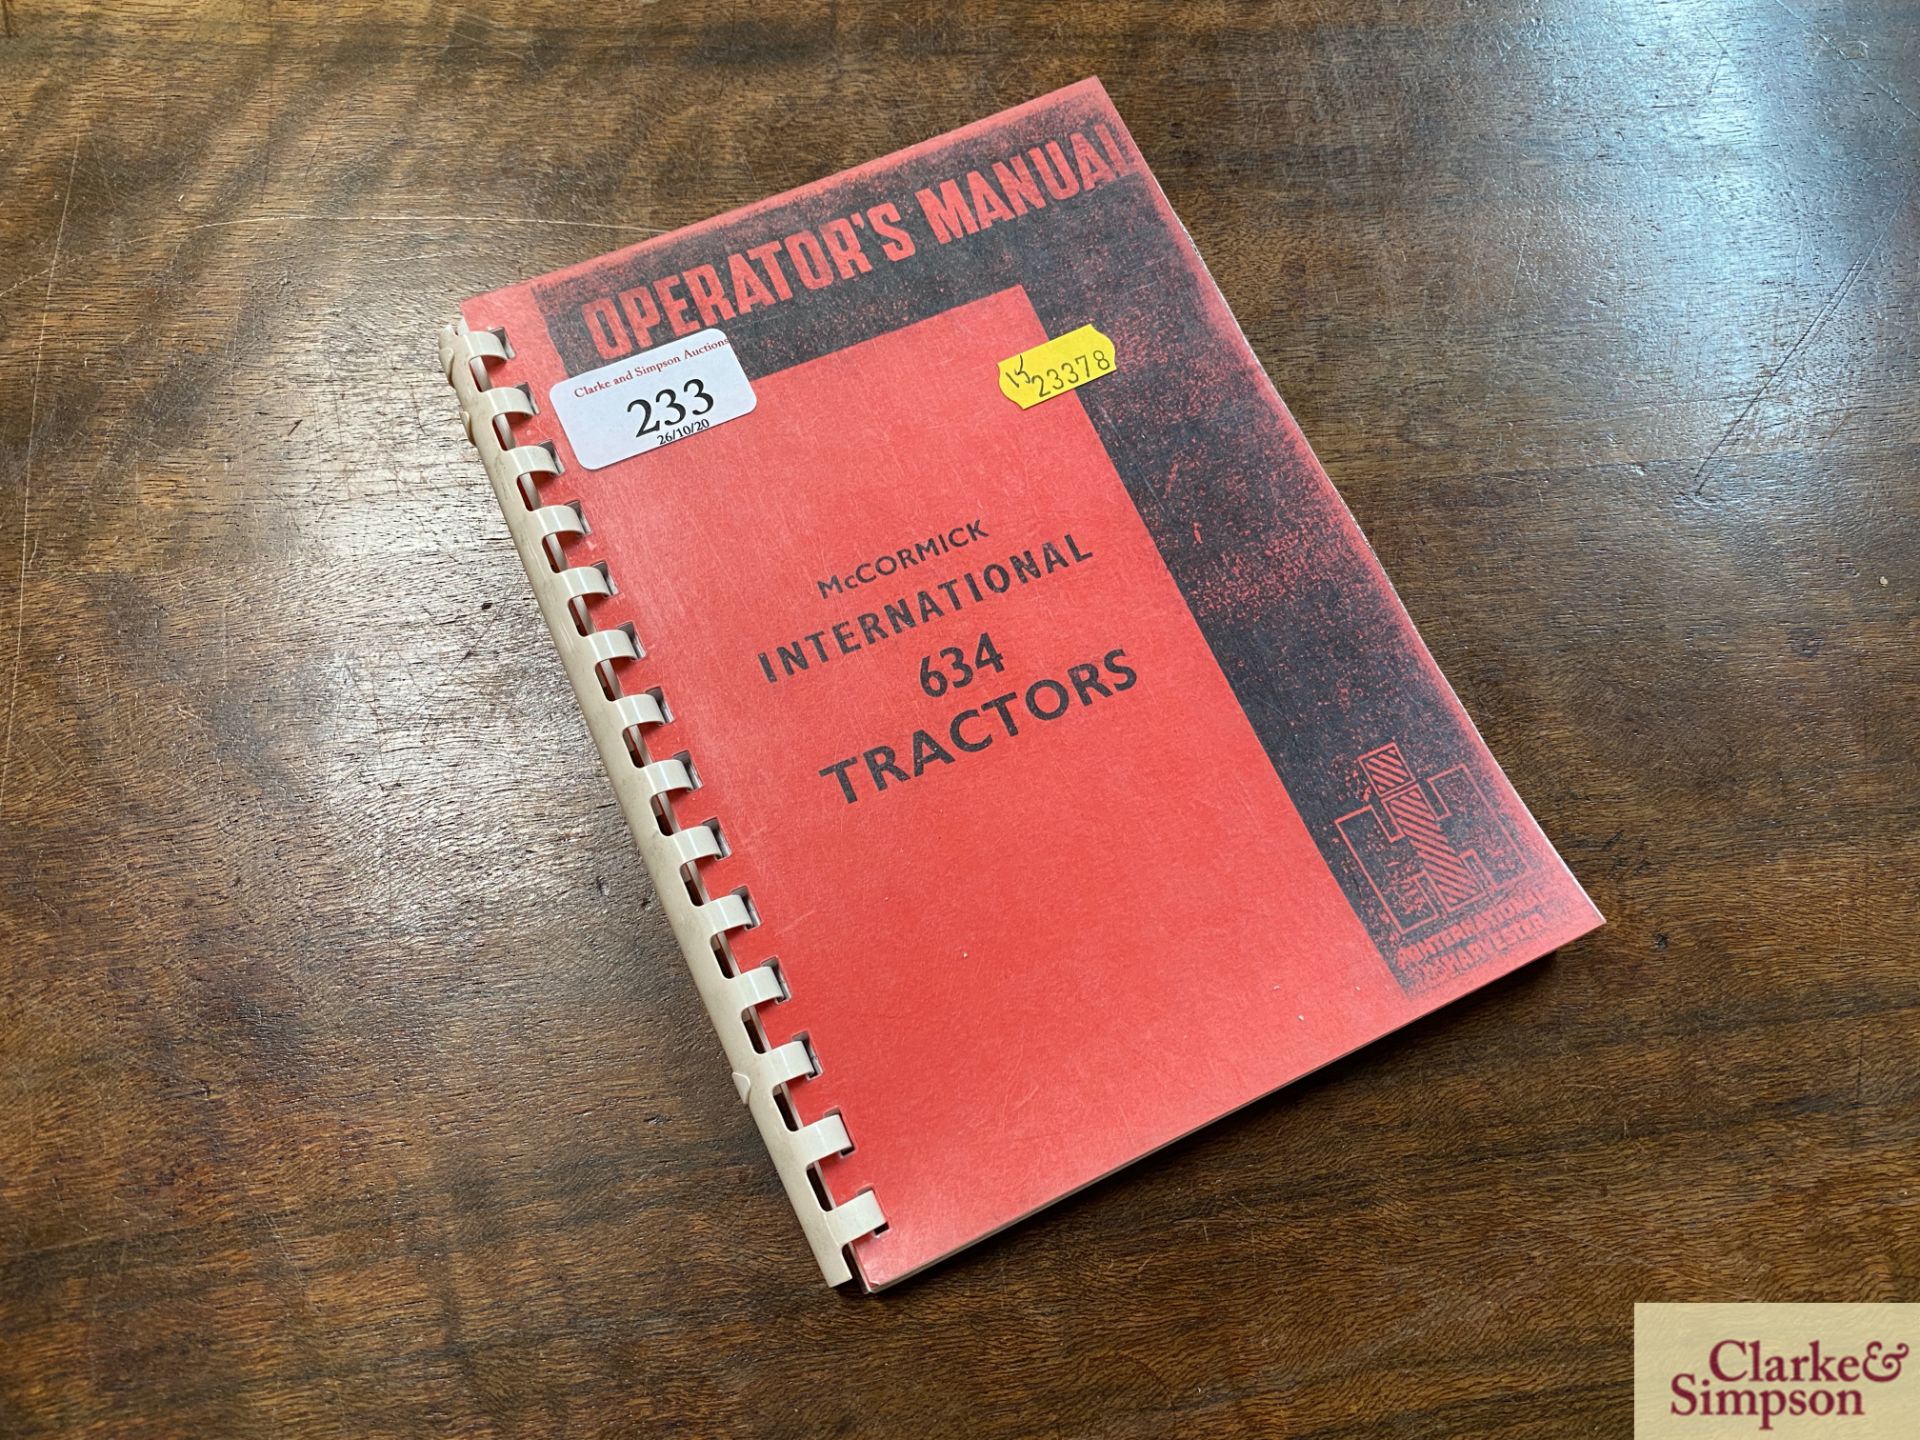 McCormick IH 634 Tractor Operators Manual.